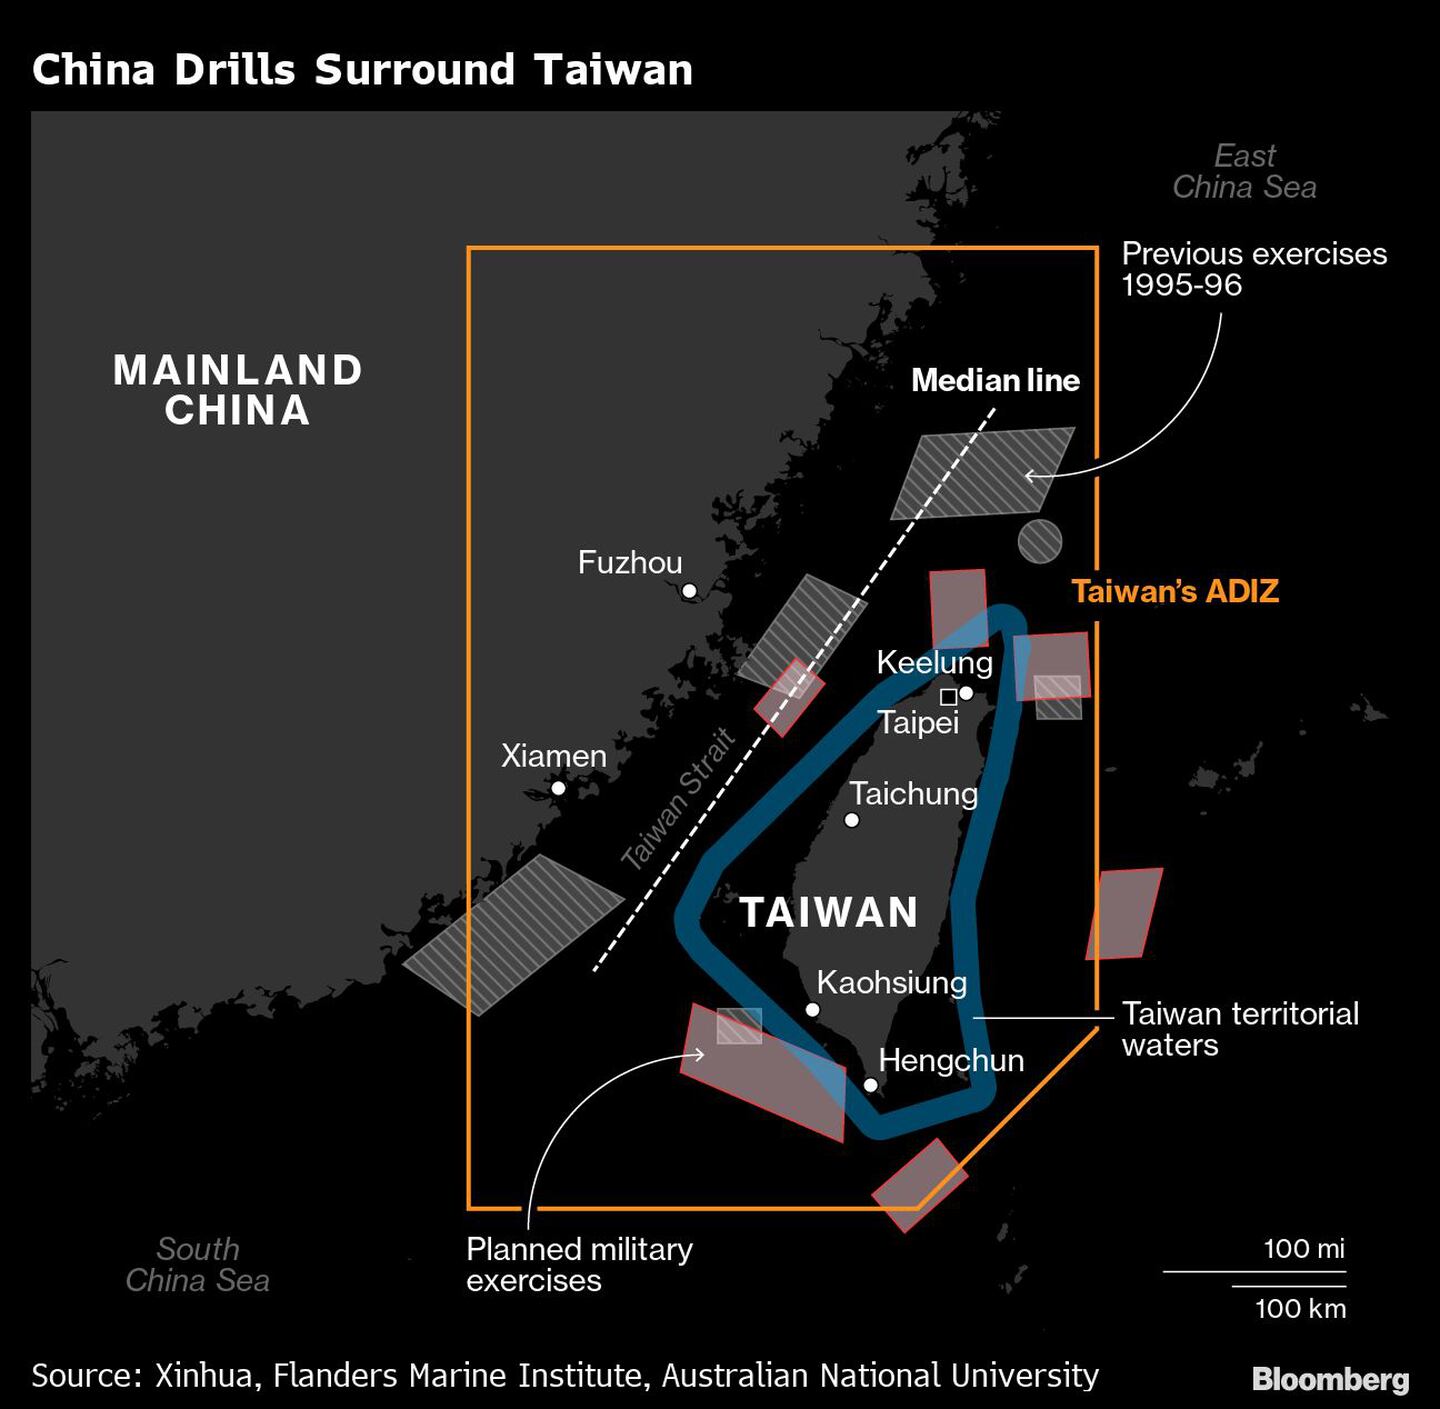 Las prácticas de China rodean a Taiwán
Naranja: La ADIZ de Taiwán 
Línea: Línea media 
Azul: aguas territoriales de Taiwán Aguas territoriales de Taiwán
Bloques blancos: Ejercicios anteriores 1995-1996
Bloques rojos: Ejercicios militares previstosdfd